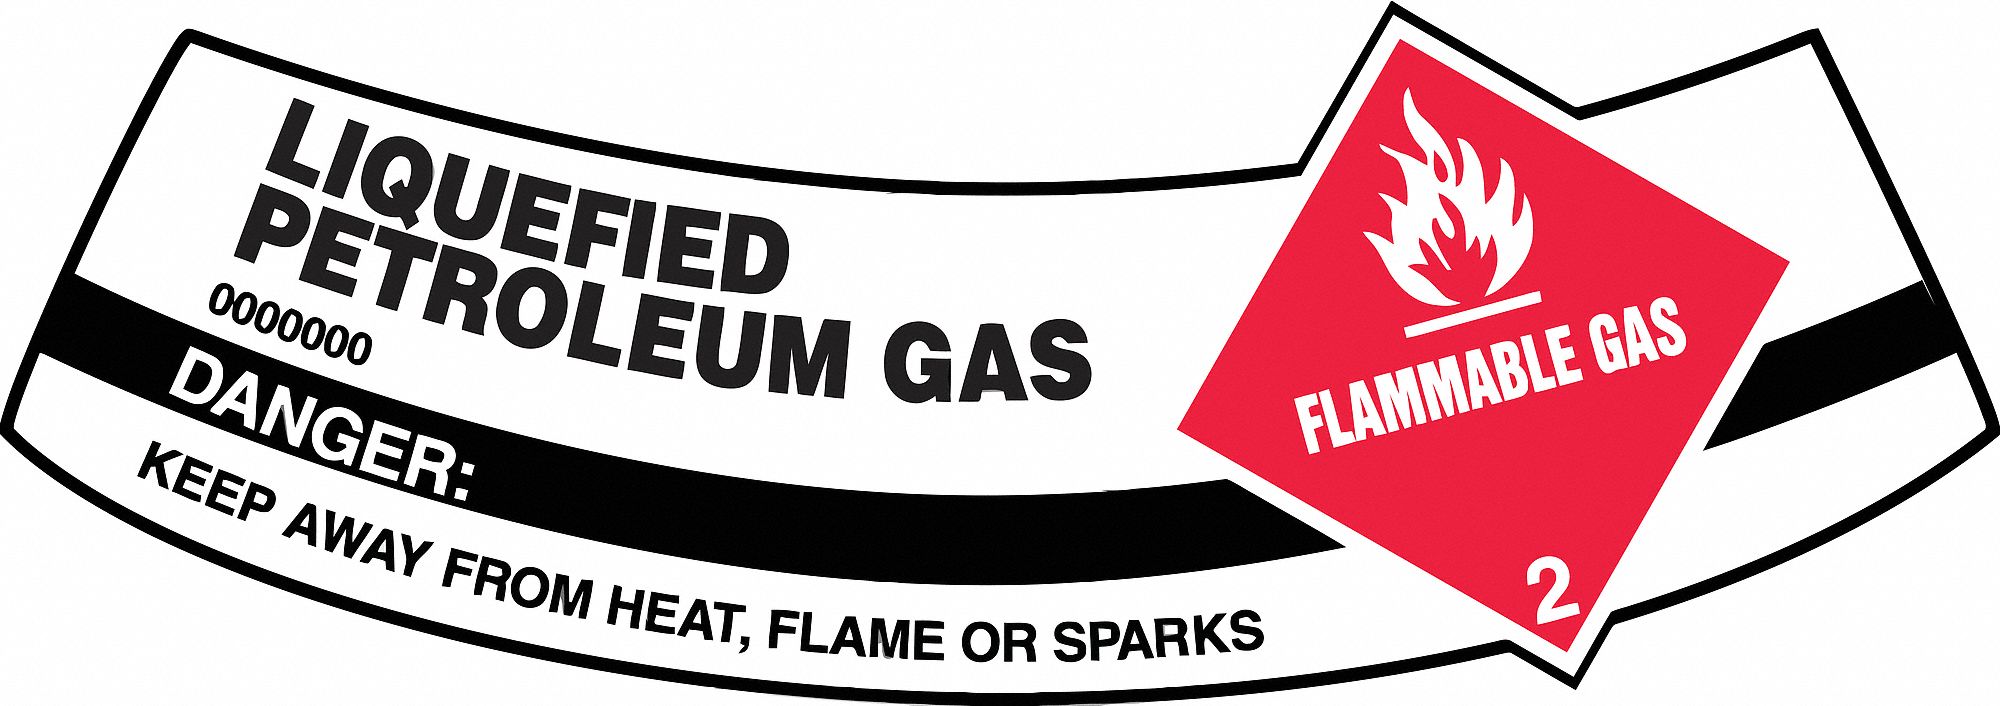 Cylinder Label,5-1/4x2 In,Petroleum